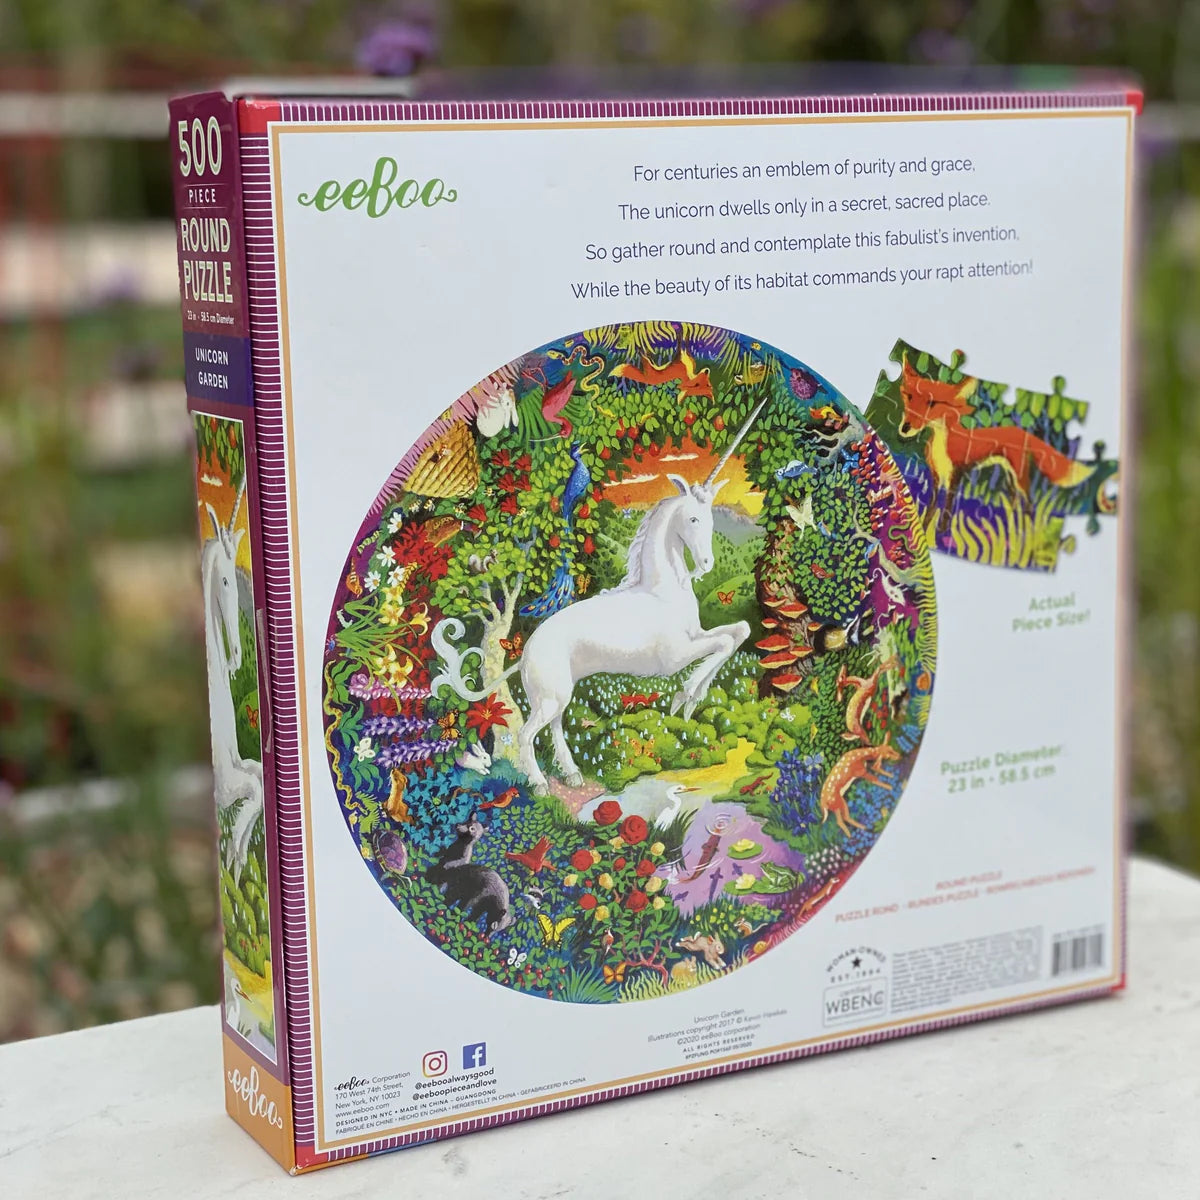 eeBoo | 500pc Round Puzzle - Unicorn Garden